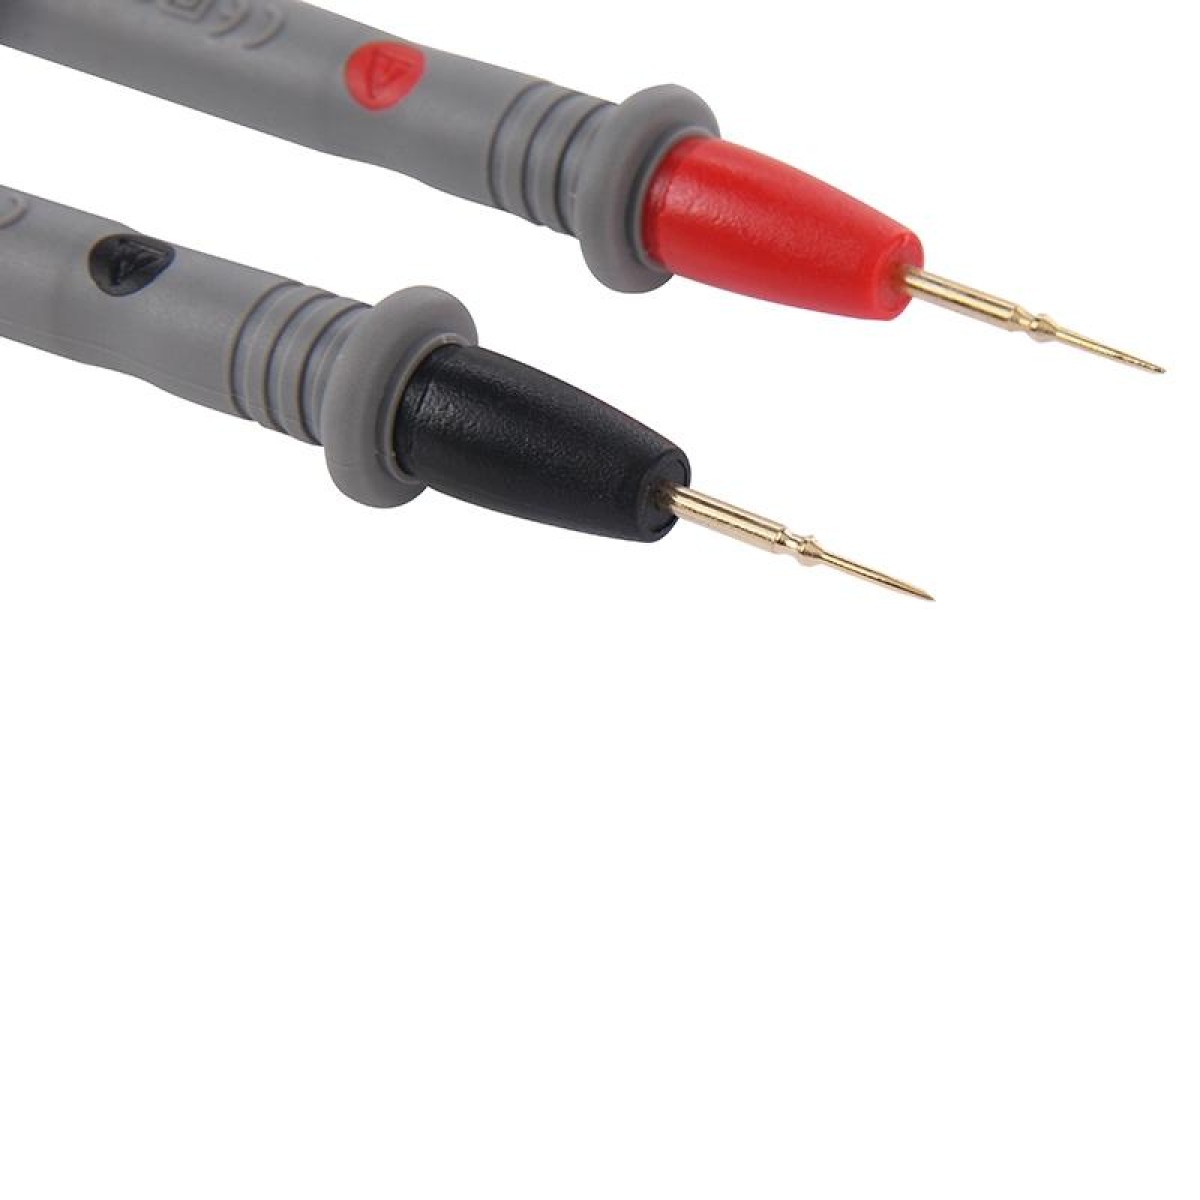 2 PCS 1000V 20A Universal Digital Multimeter Multi Meter Test Lead Probe Wire Pen Cable